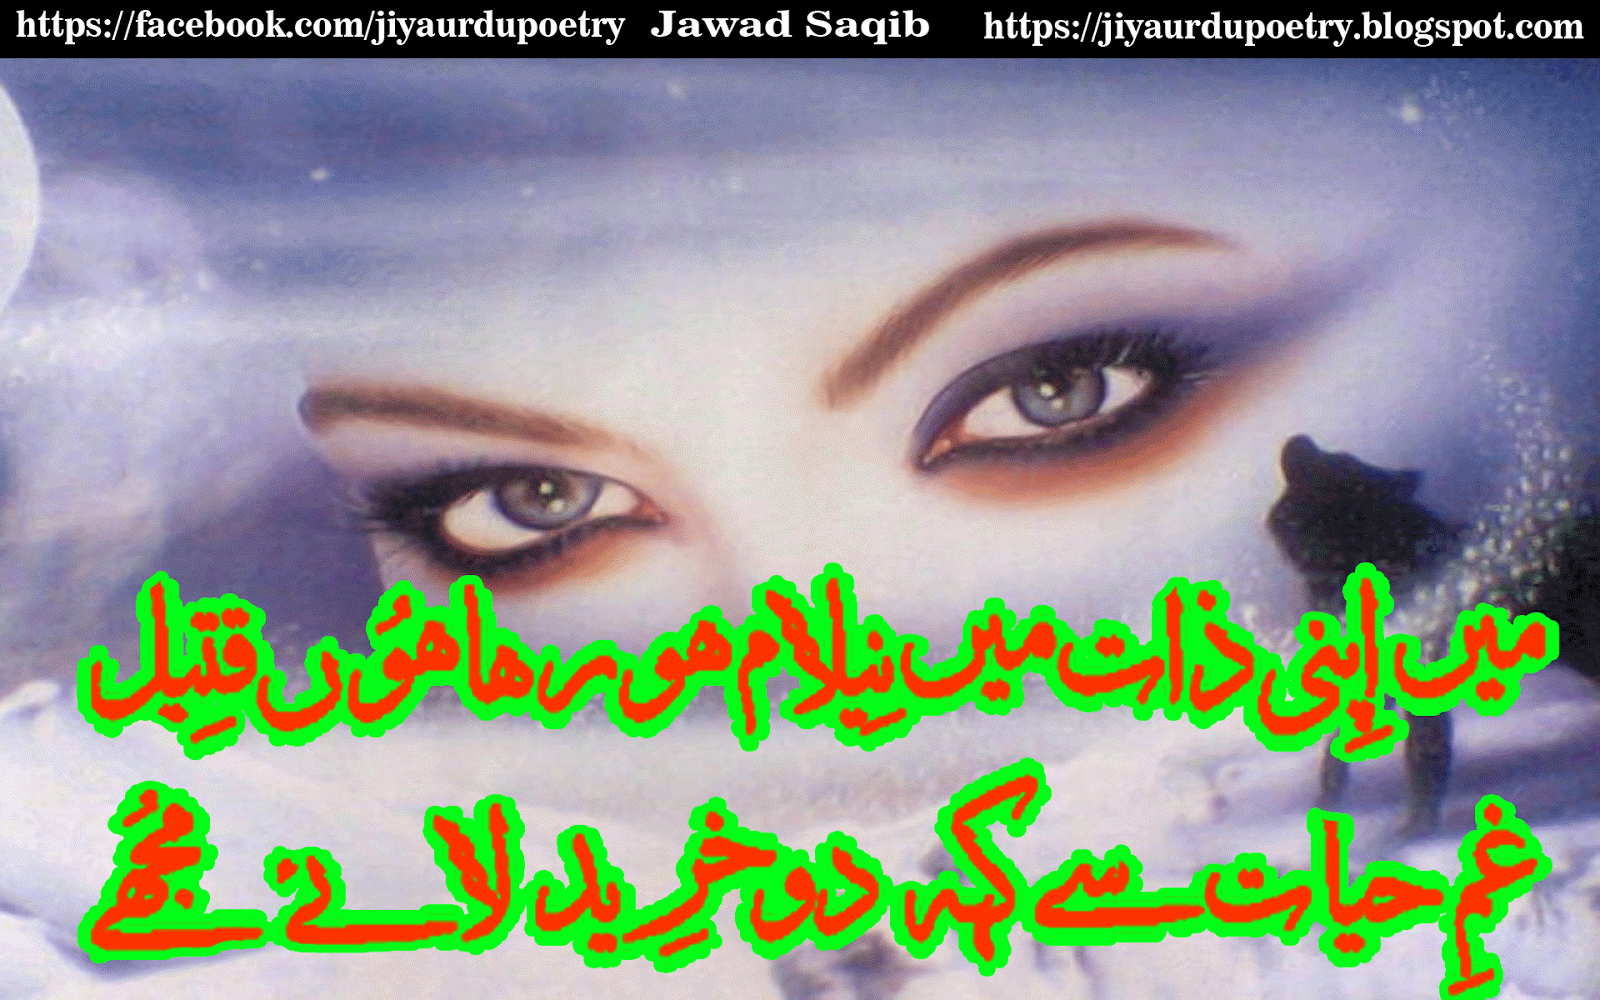 urdu shayari picture gif small